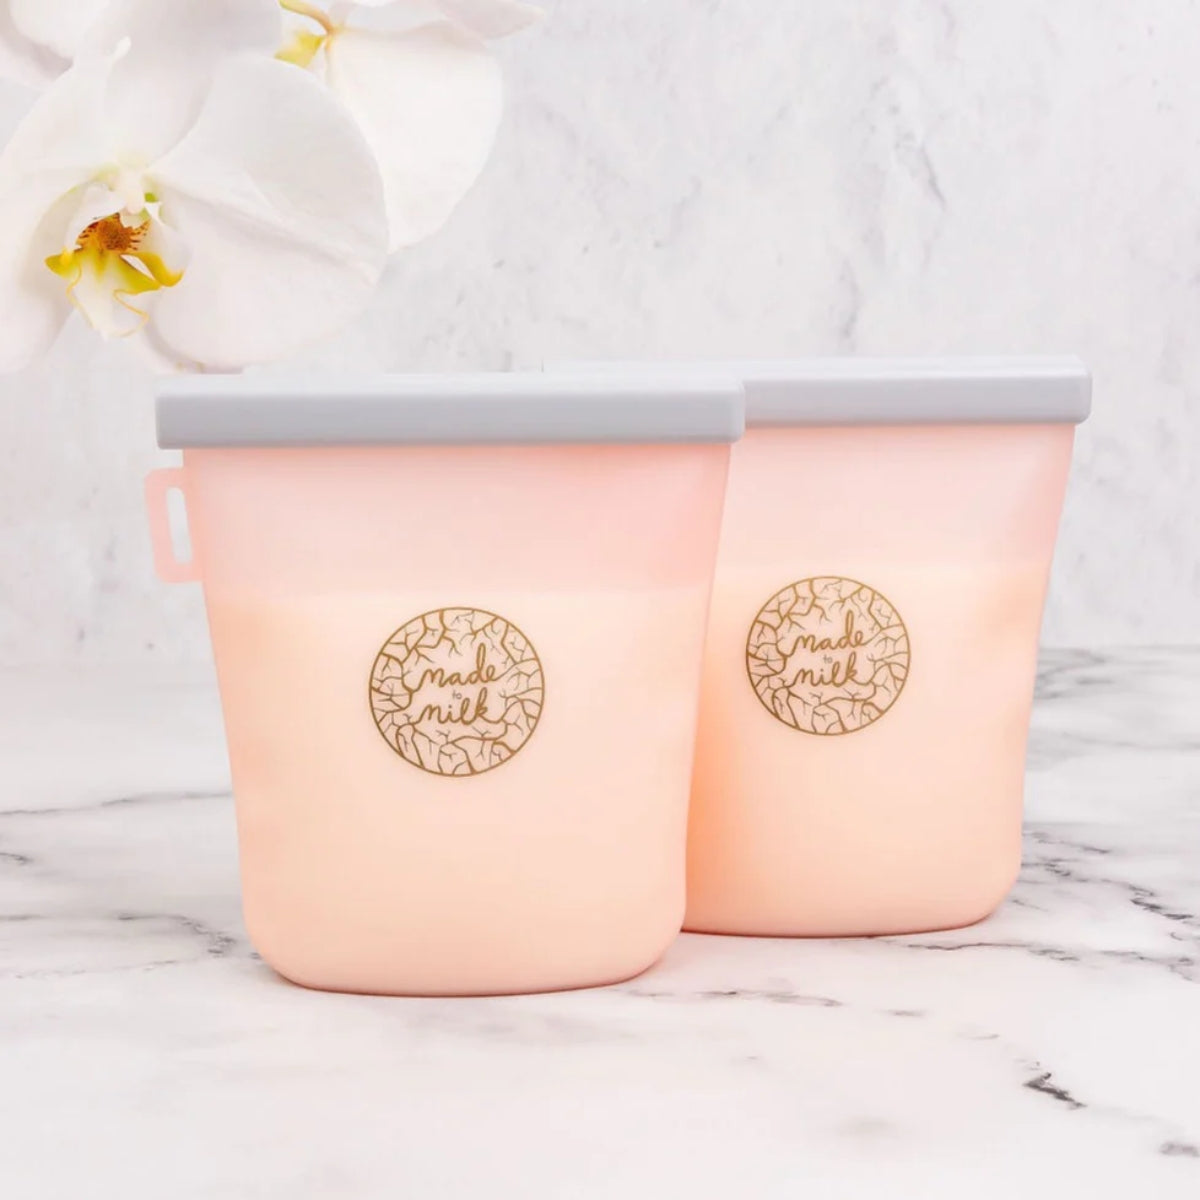 Made to Milk - Reusable Breastmilk Storage Bags - 2 pack in Light Pink